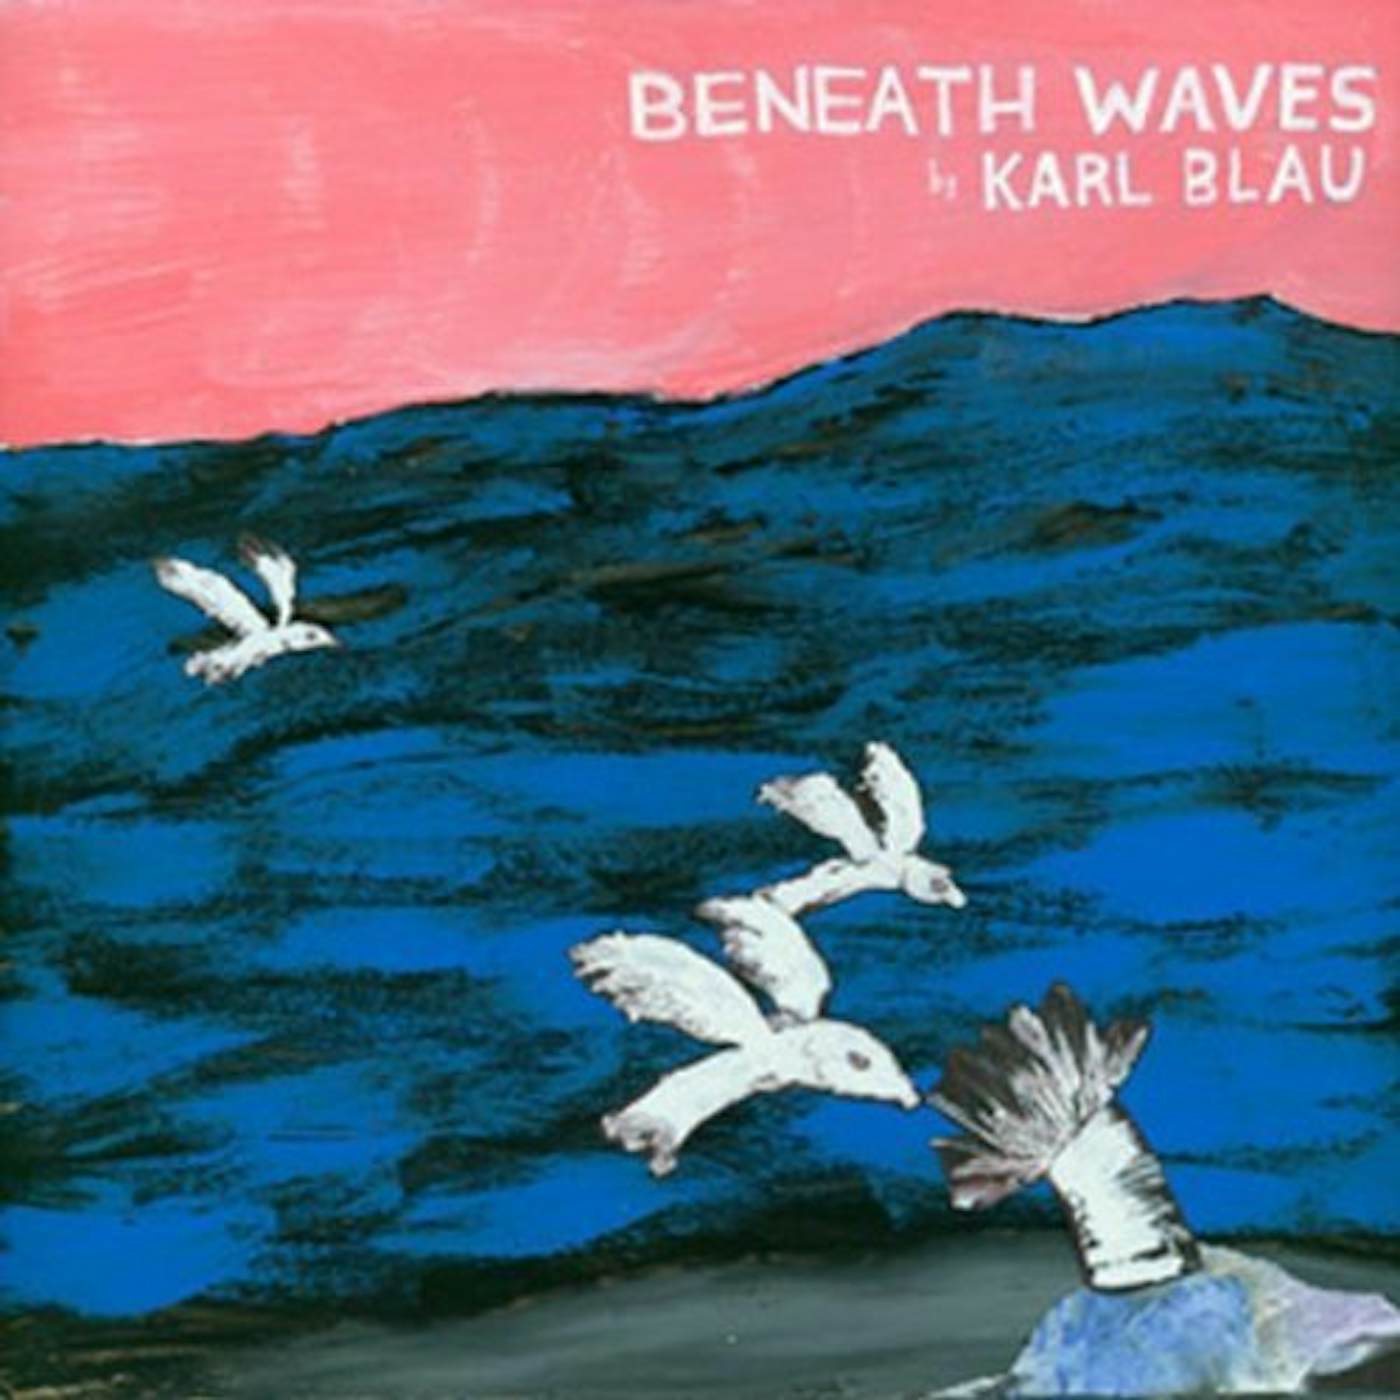 Karl Blau Beneath Waves Vinyl Record